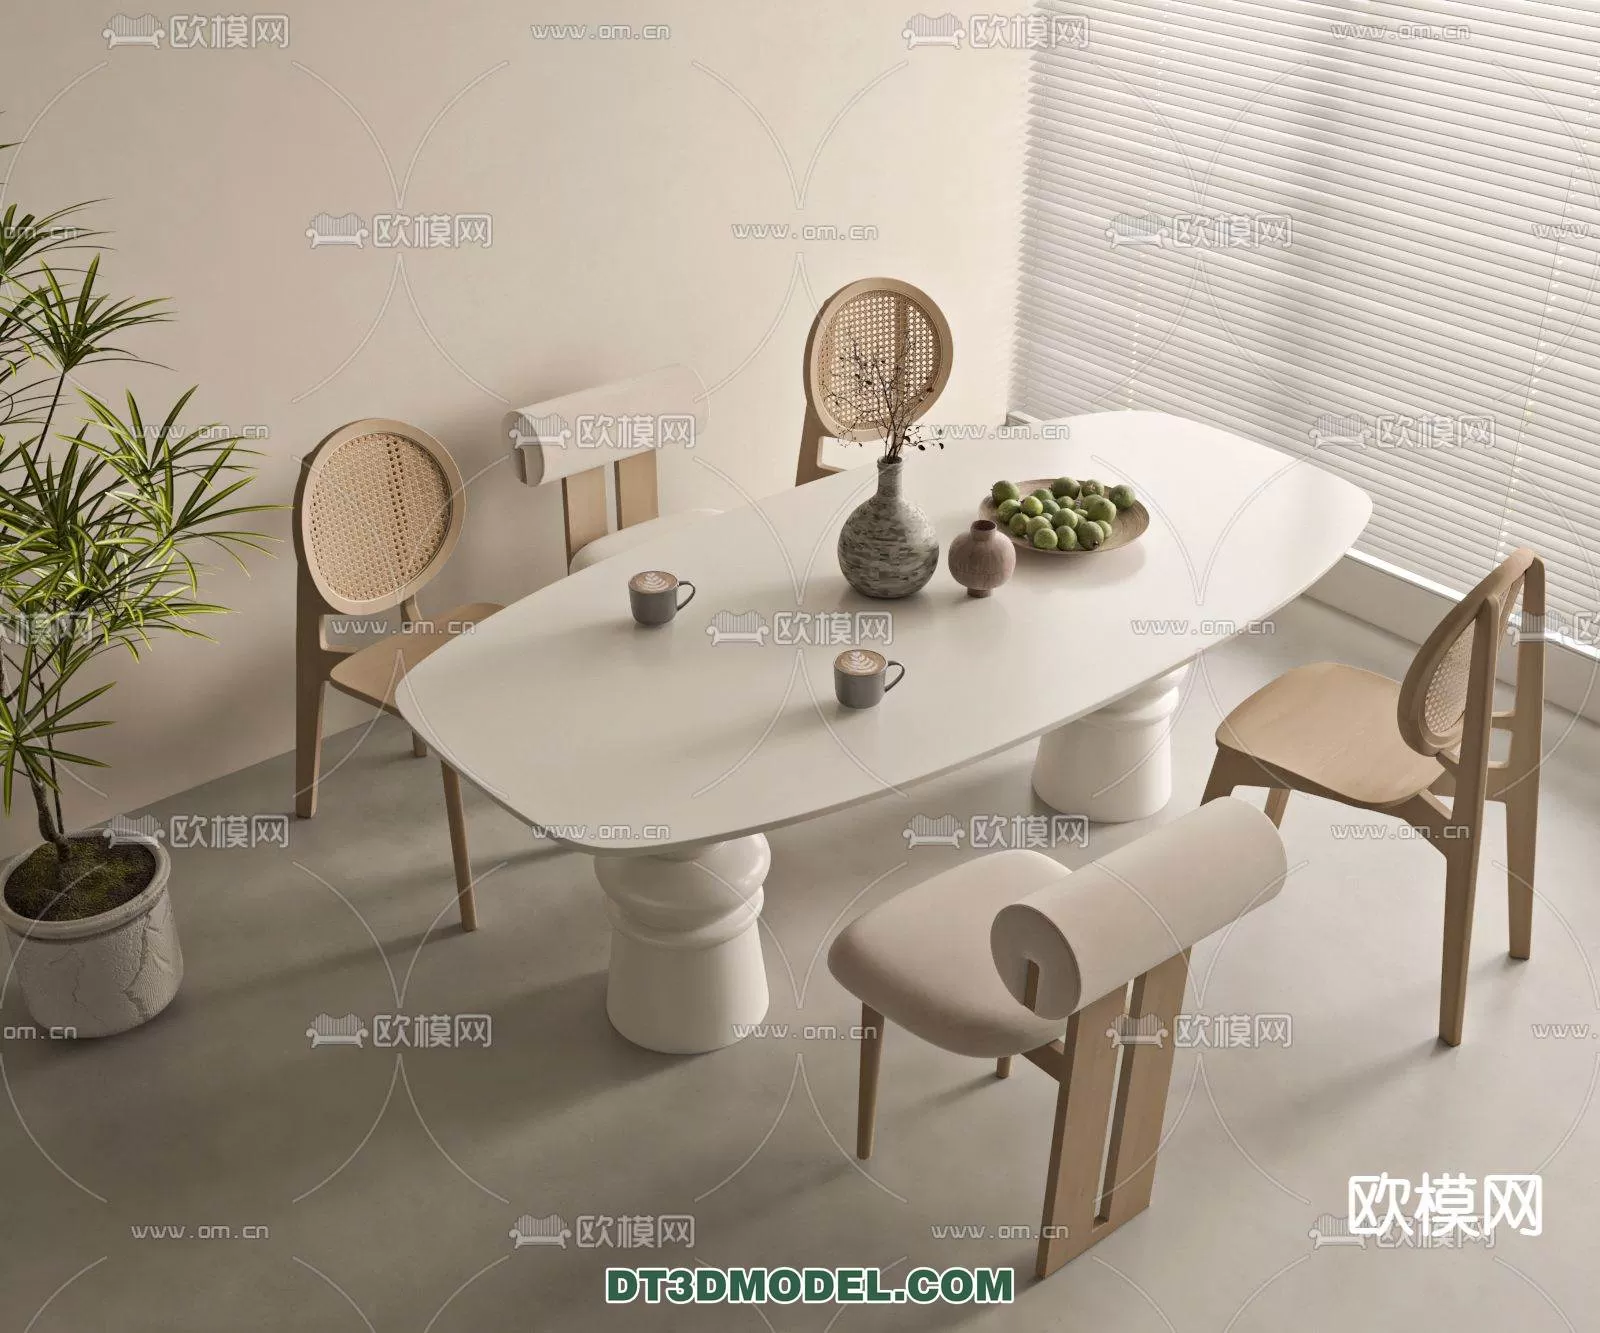 WABI SABI STYLE 3D MODELS – DINING TABLE – 0182